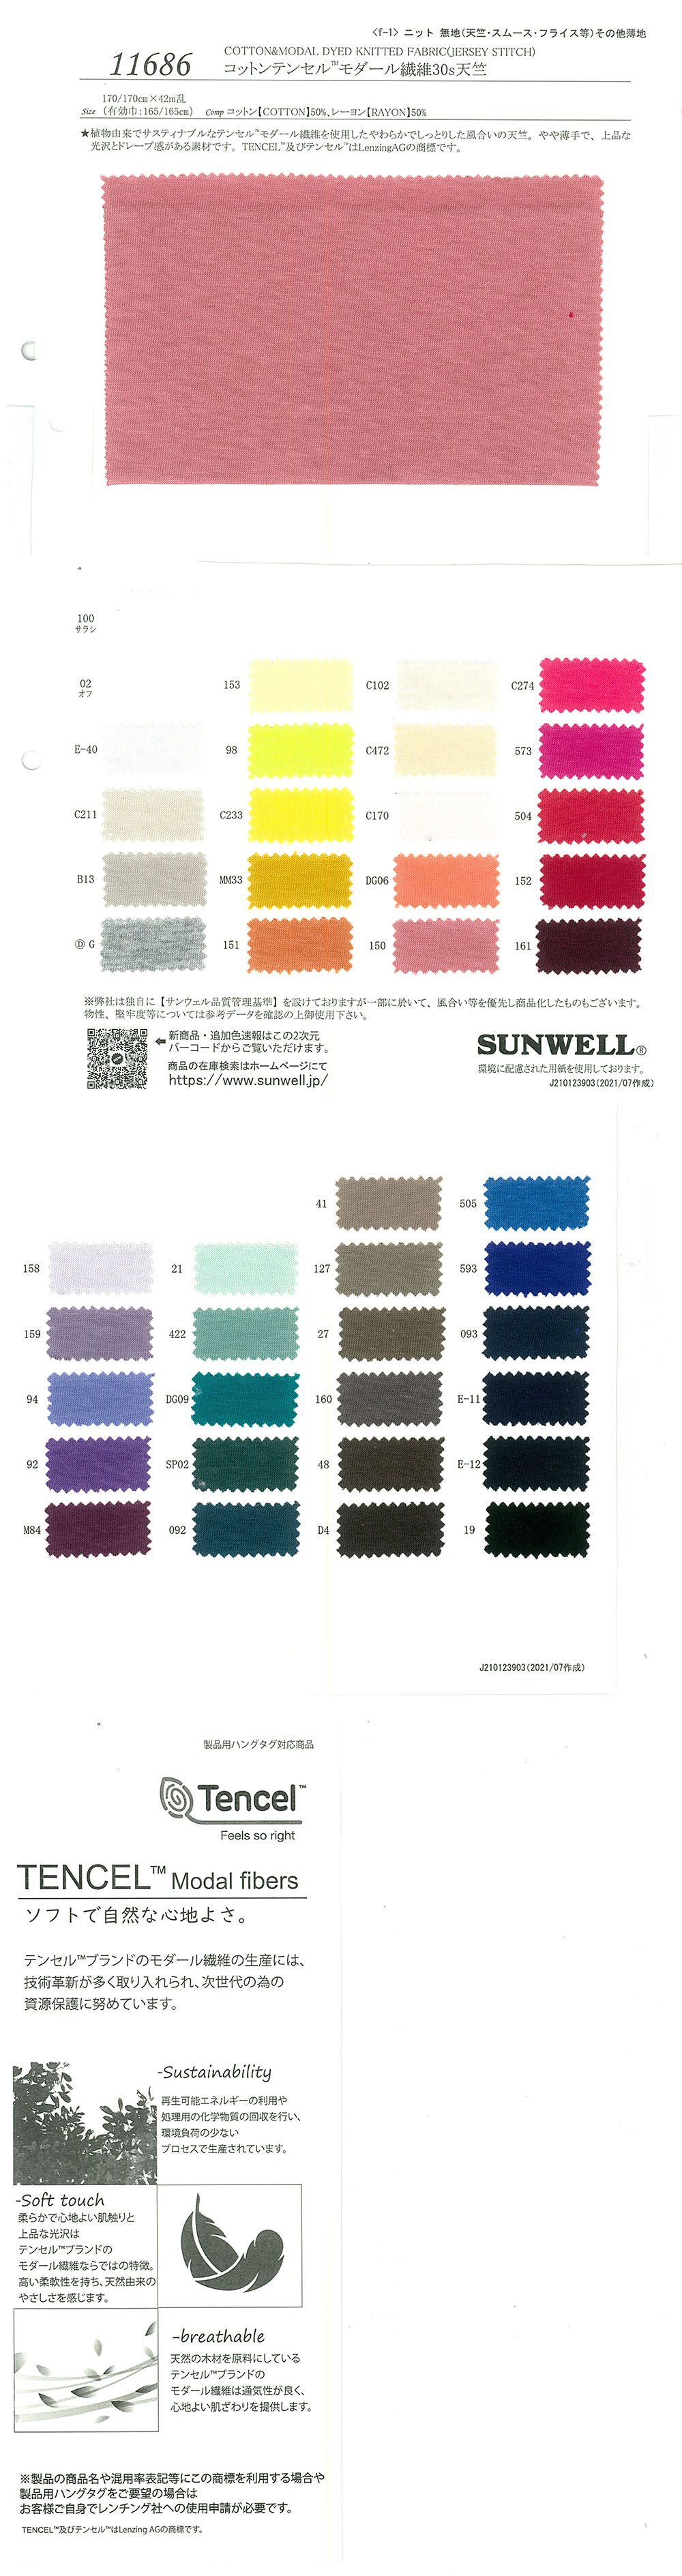 11686 Baumwolle/Tencel™ Modalfaser 30 Single-Thread-Jersey[Textilgewebe] SUNWELL